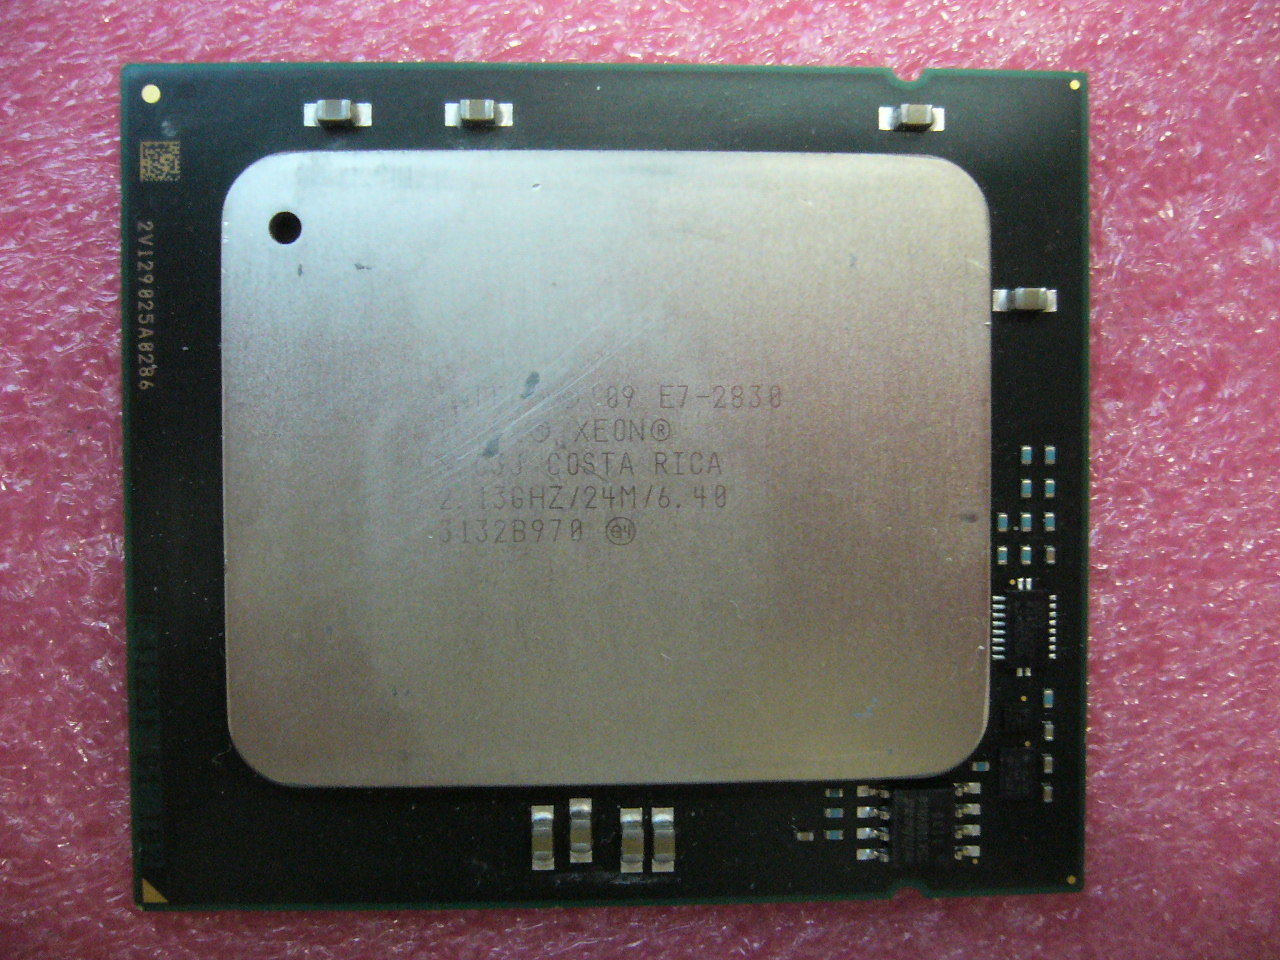 QTY 1x INTEL Eight-Core CPU E7-2830 2.13GHZ/24MB/640 LGA1567 SLC3J - zum Schließen ins Bild klicken